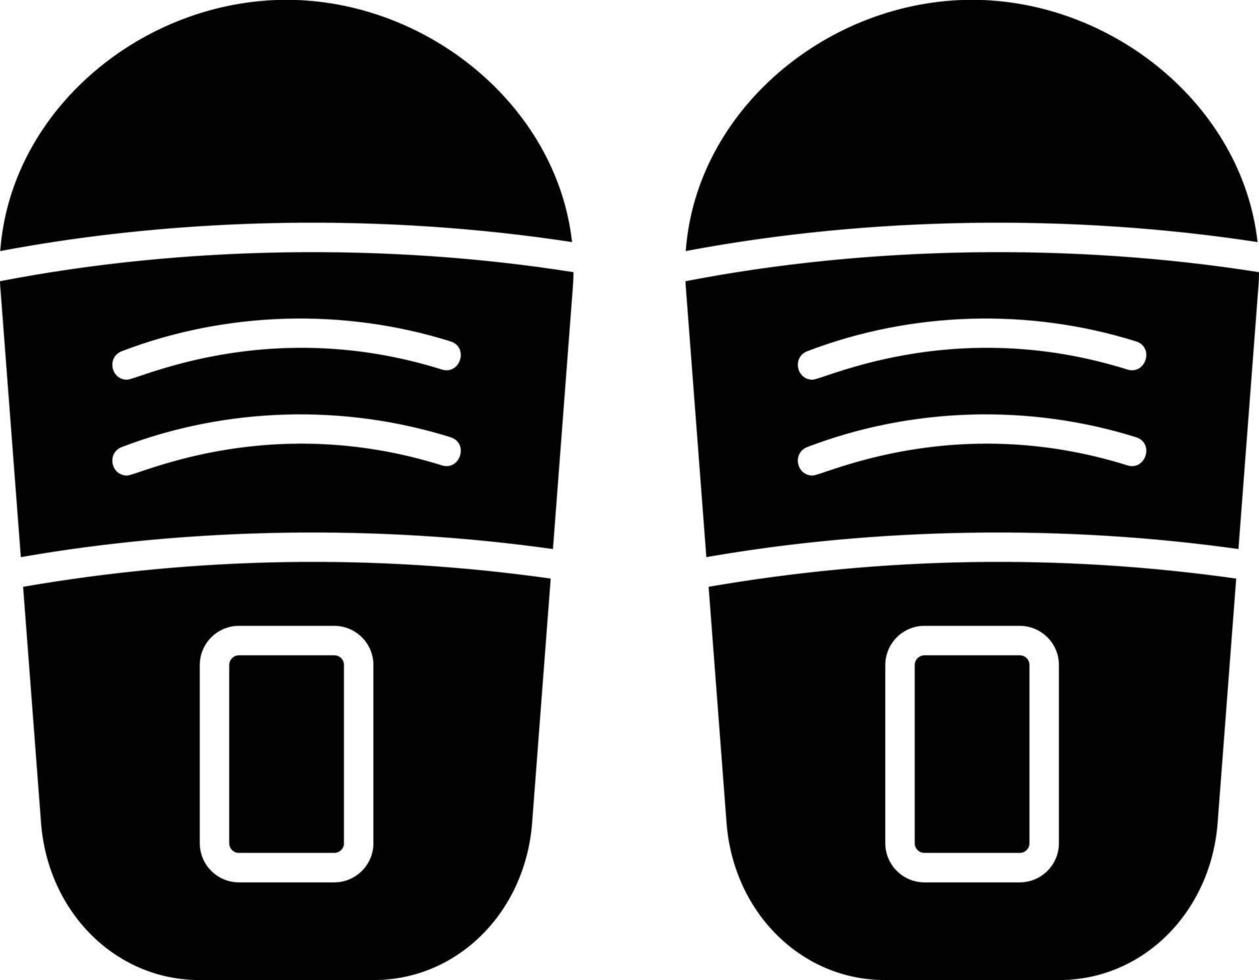 pantofole creativo icona design vettore